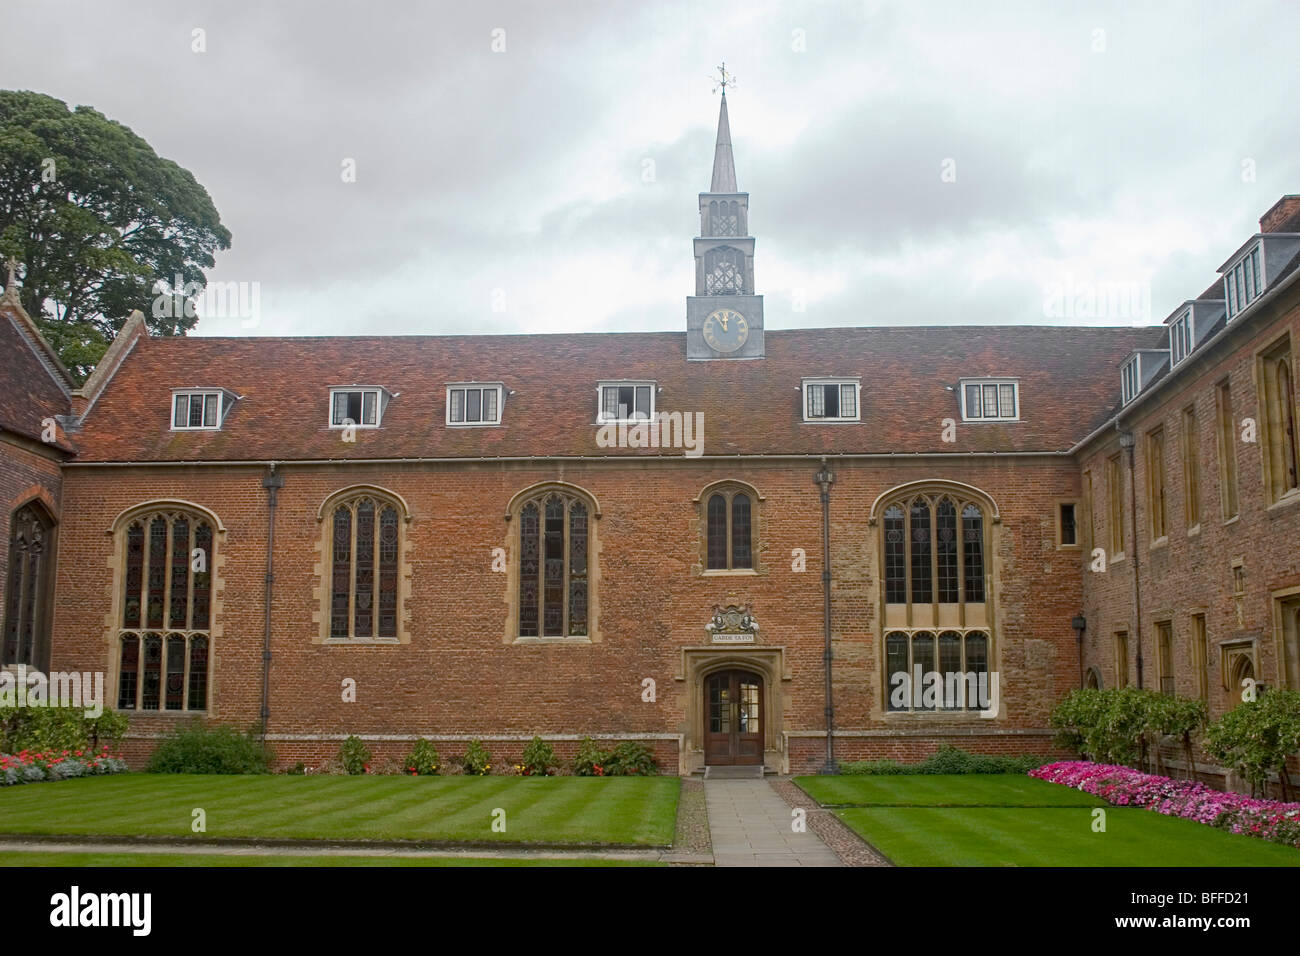 Cambridge University on a cloudy day Stock Photo